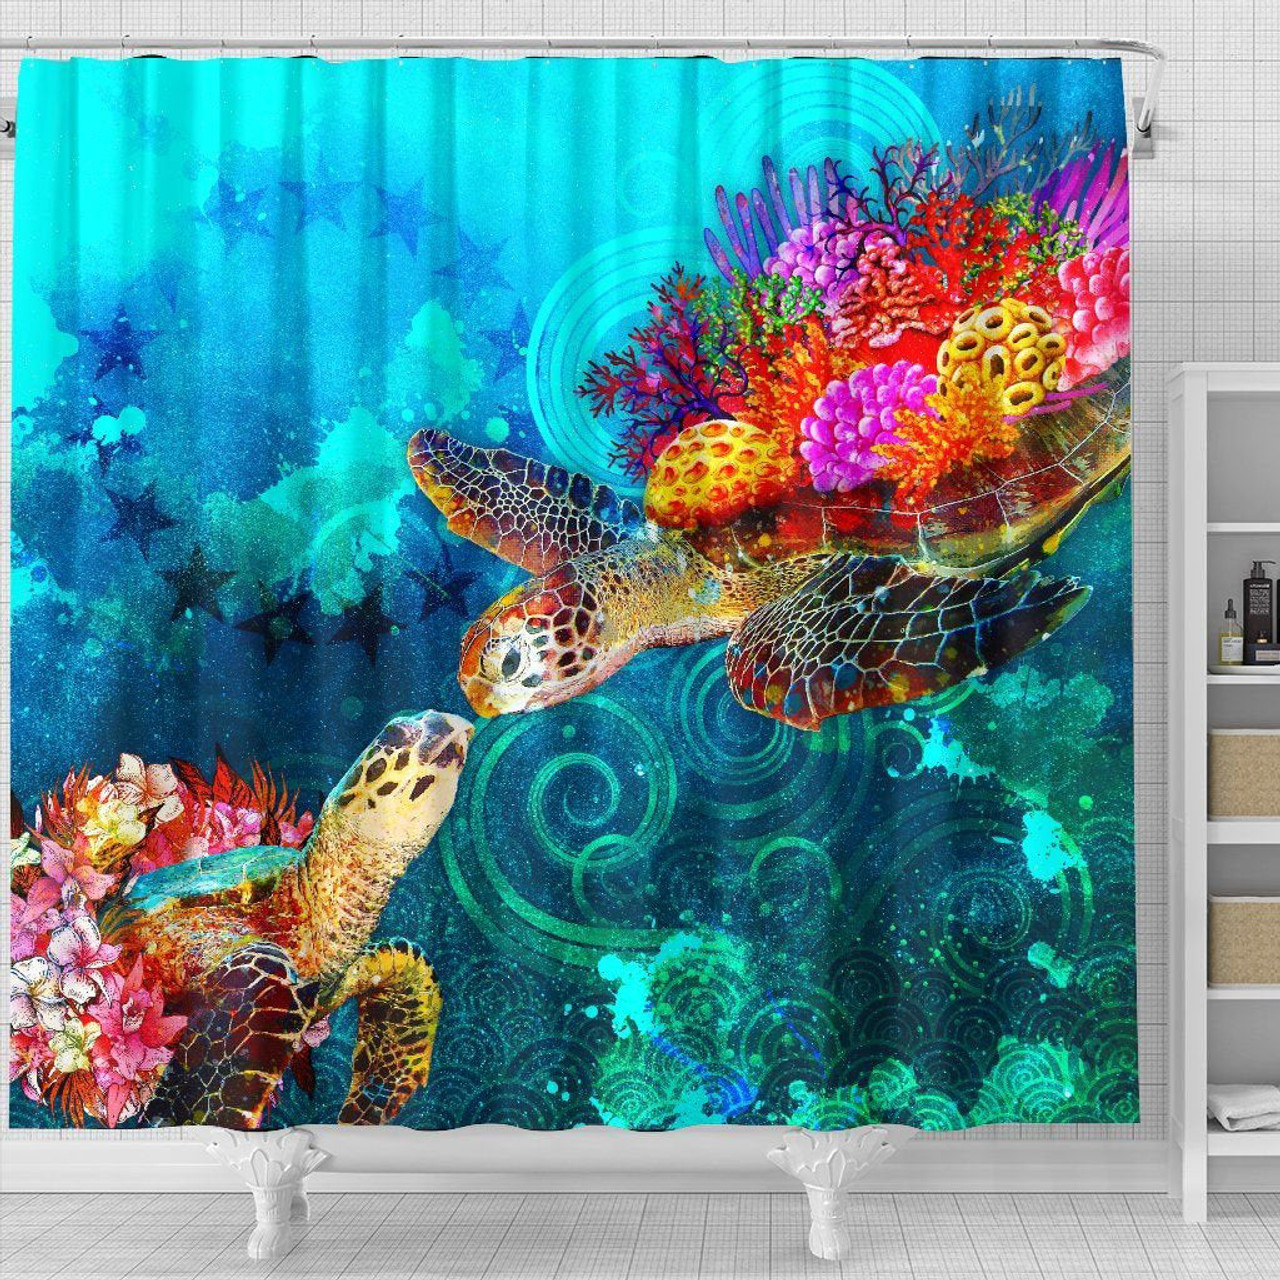 Cook Islands Shower Curtain - Sea Turtle Coral Treasure 4